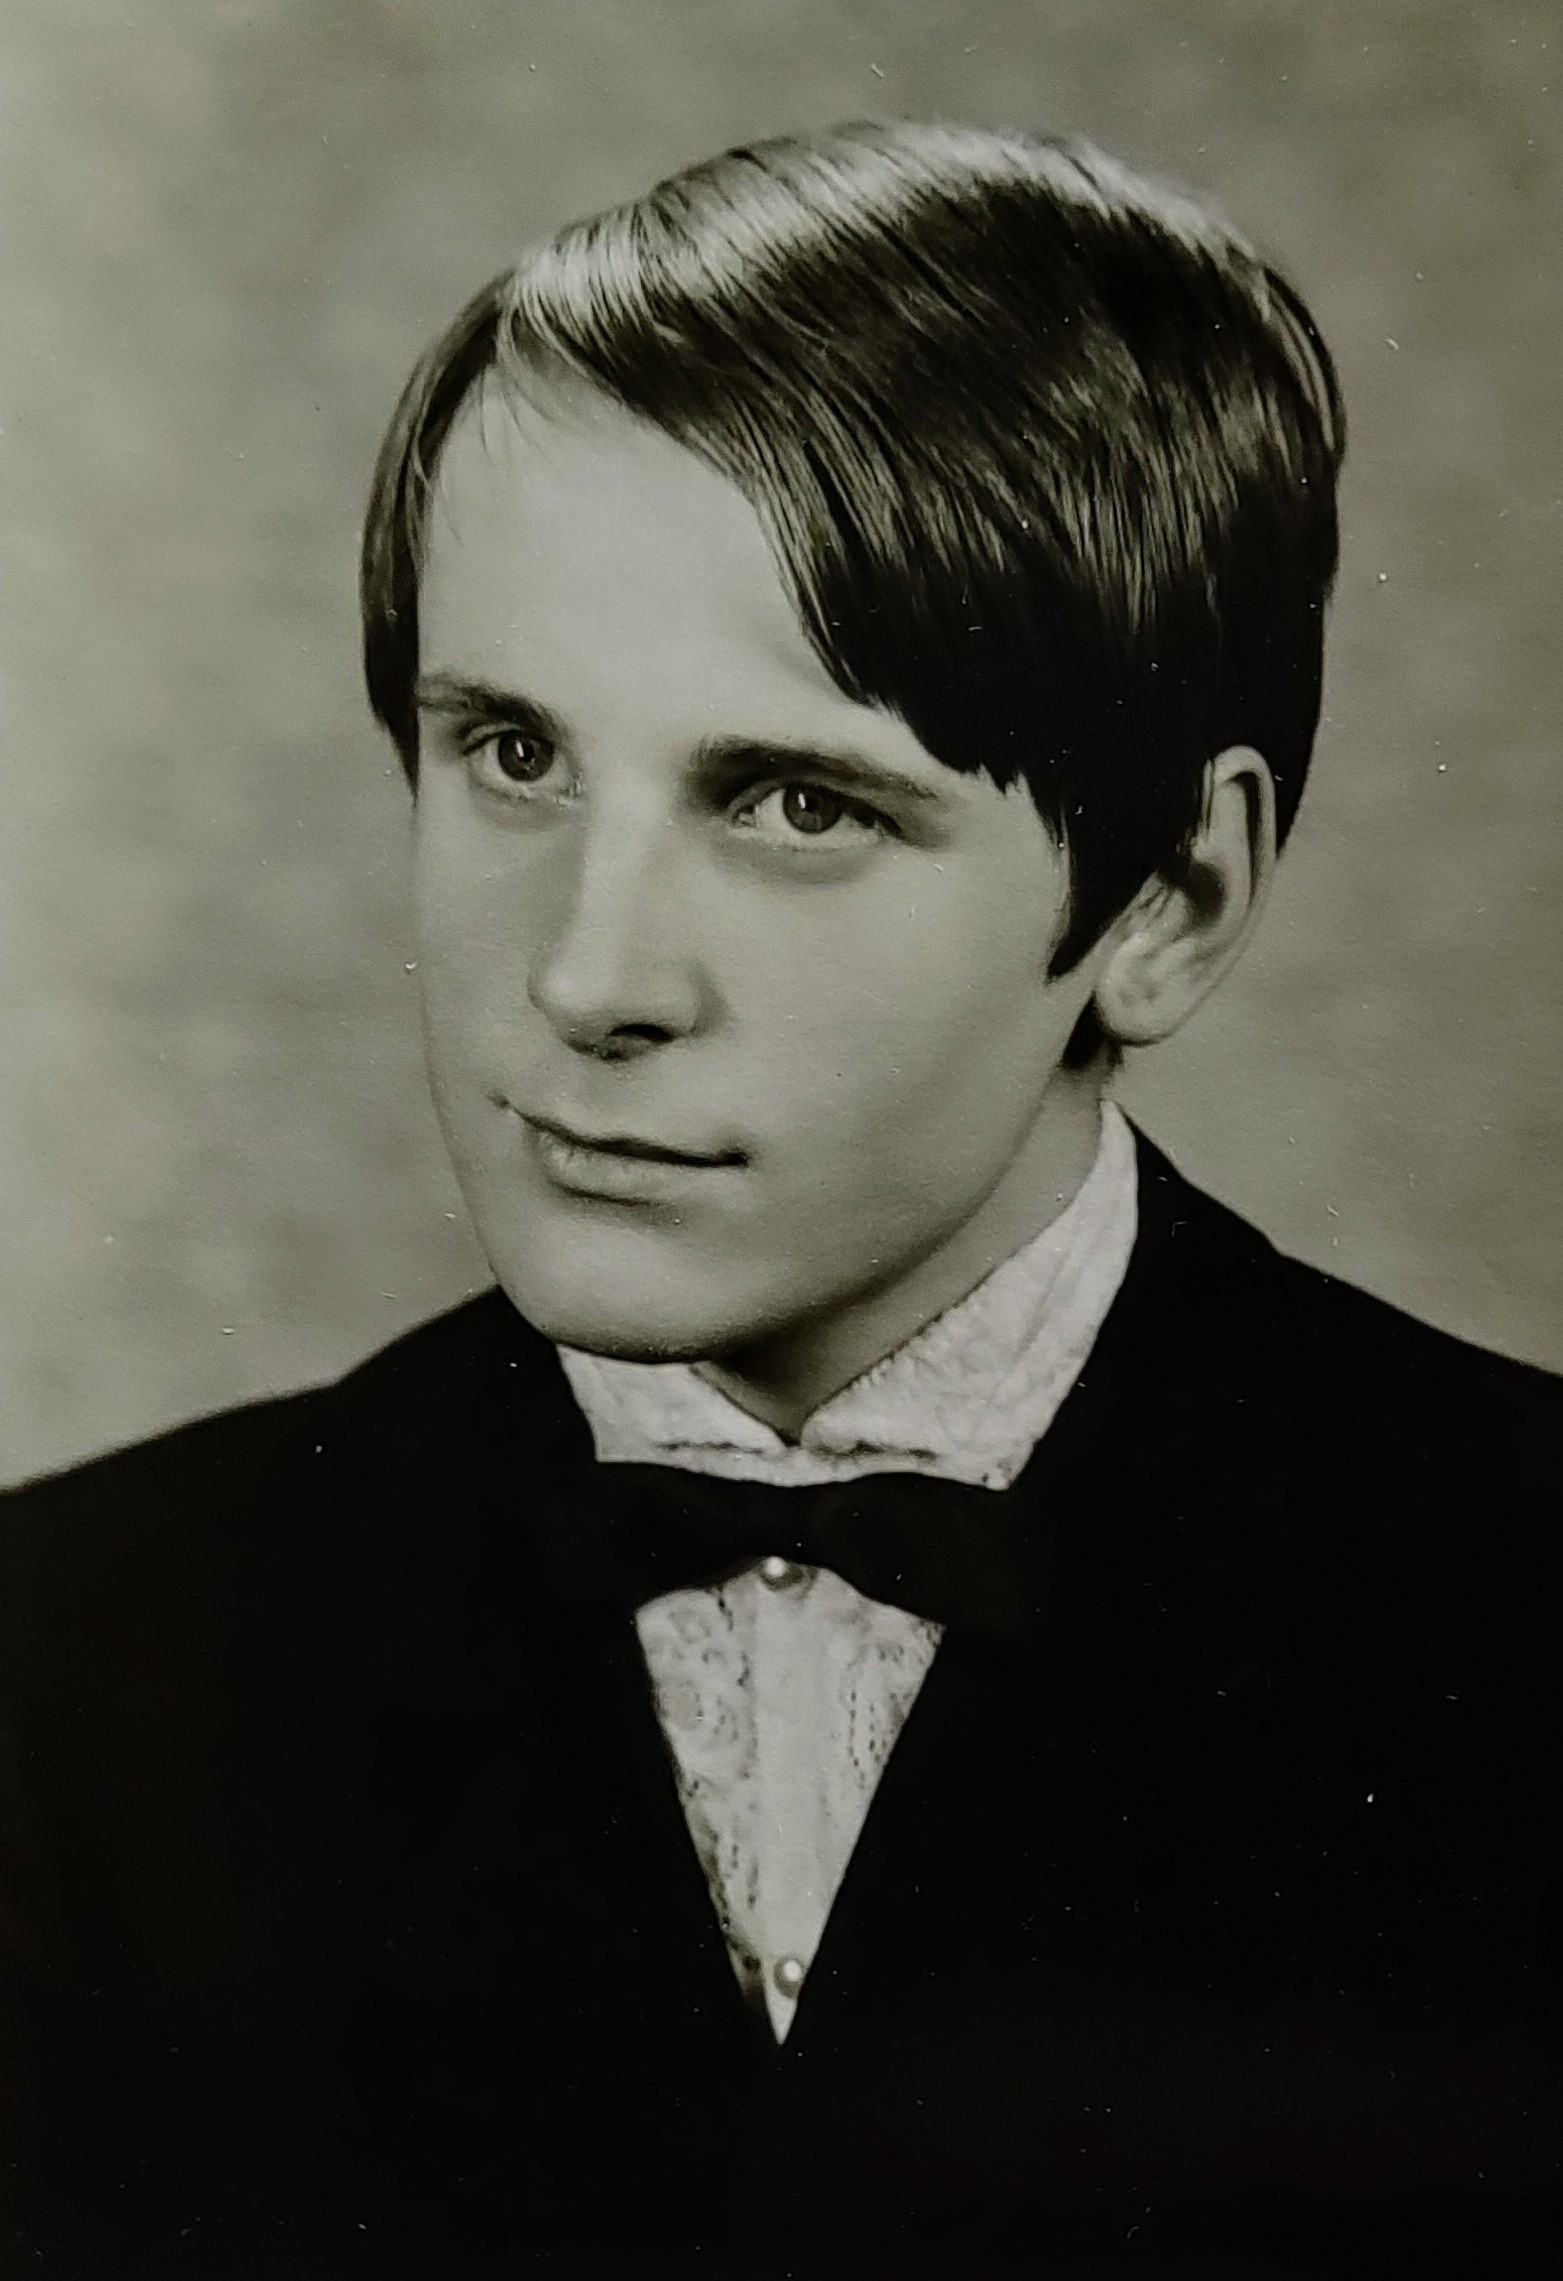 Josef Čermák in the youth